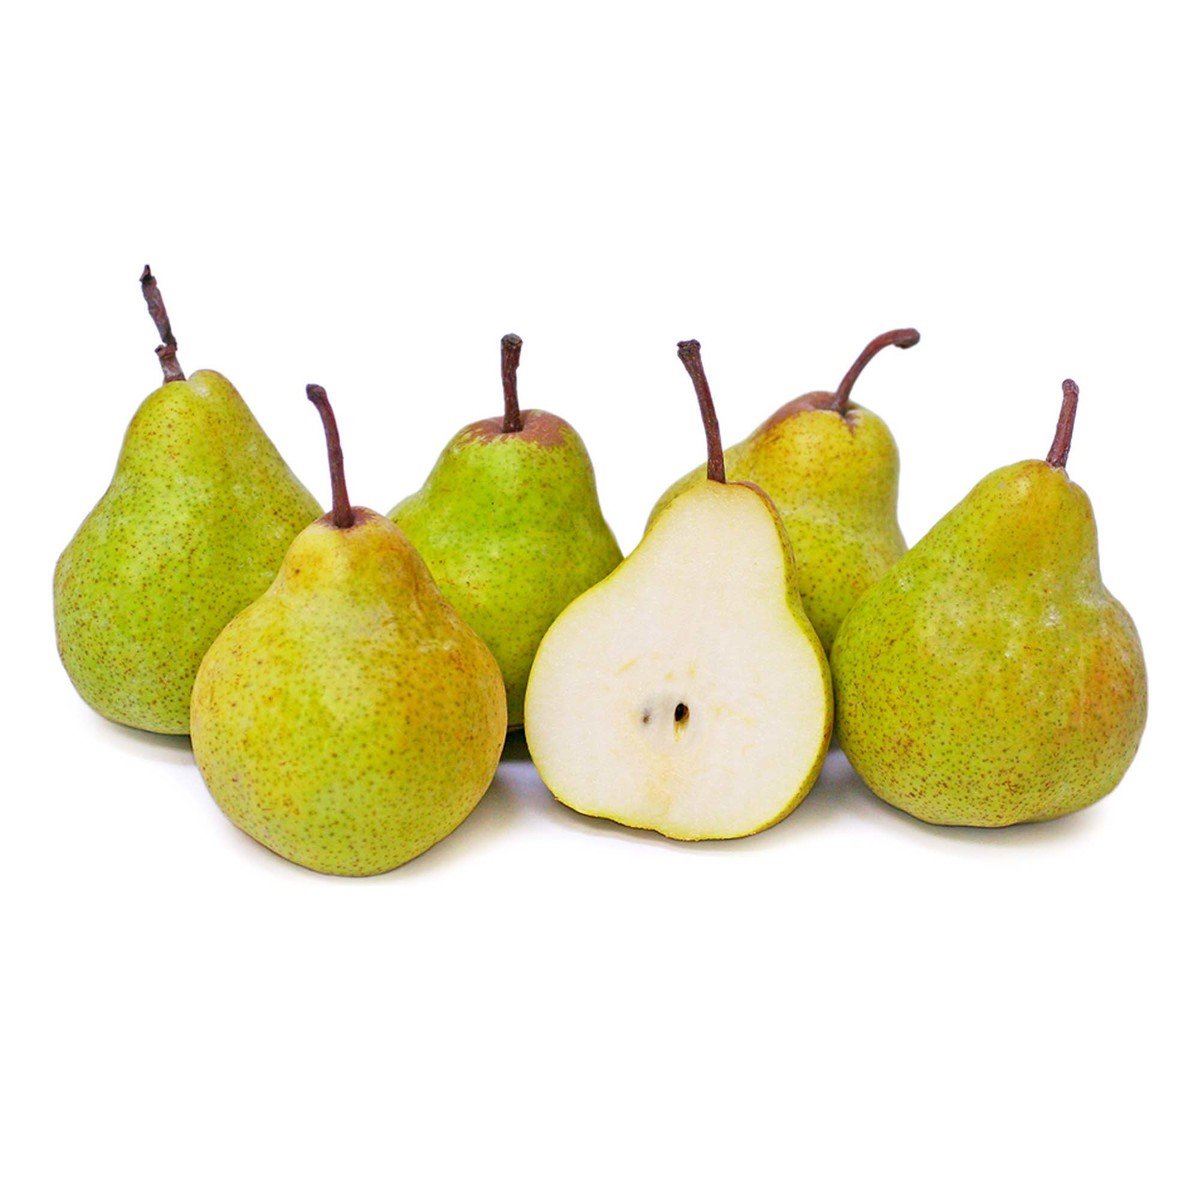 Pears Packham 1 Kg Online At Best Price Pears Lulu Kuwait Price In 